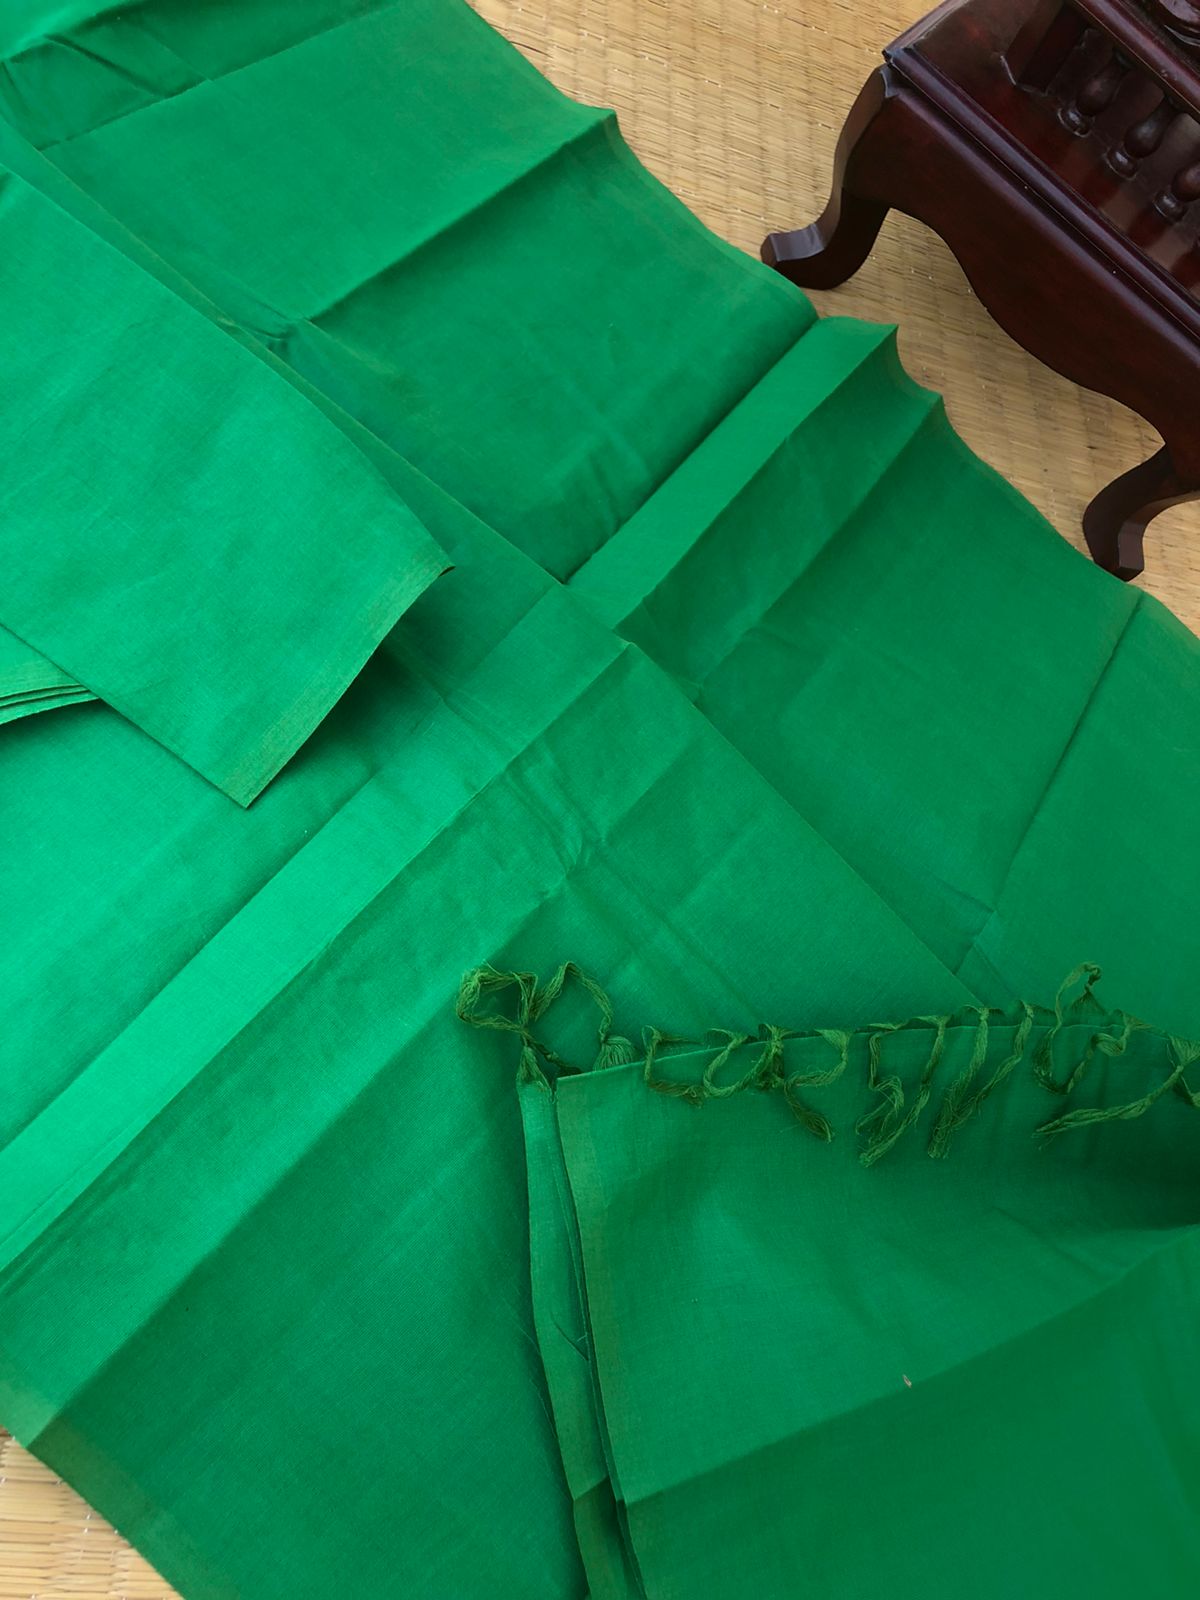 7 to 11 - colours of full plain cotton sarees - beautiful leafy green